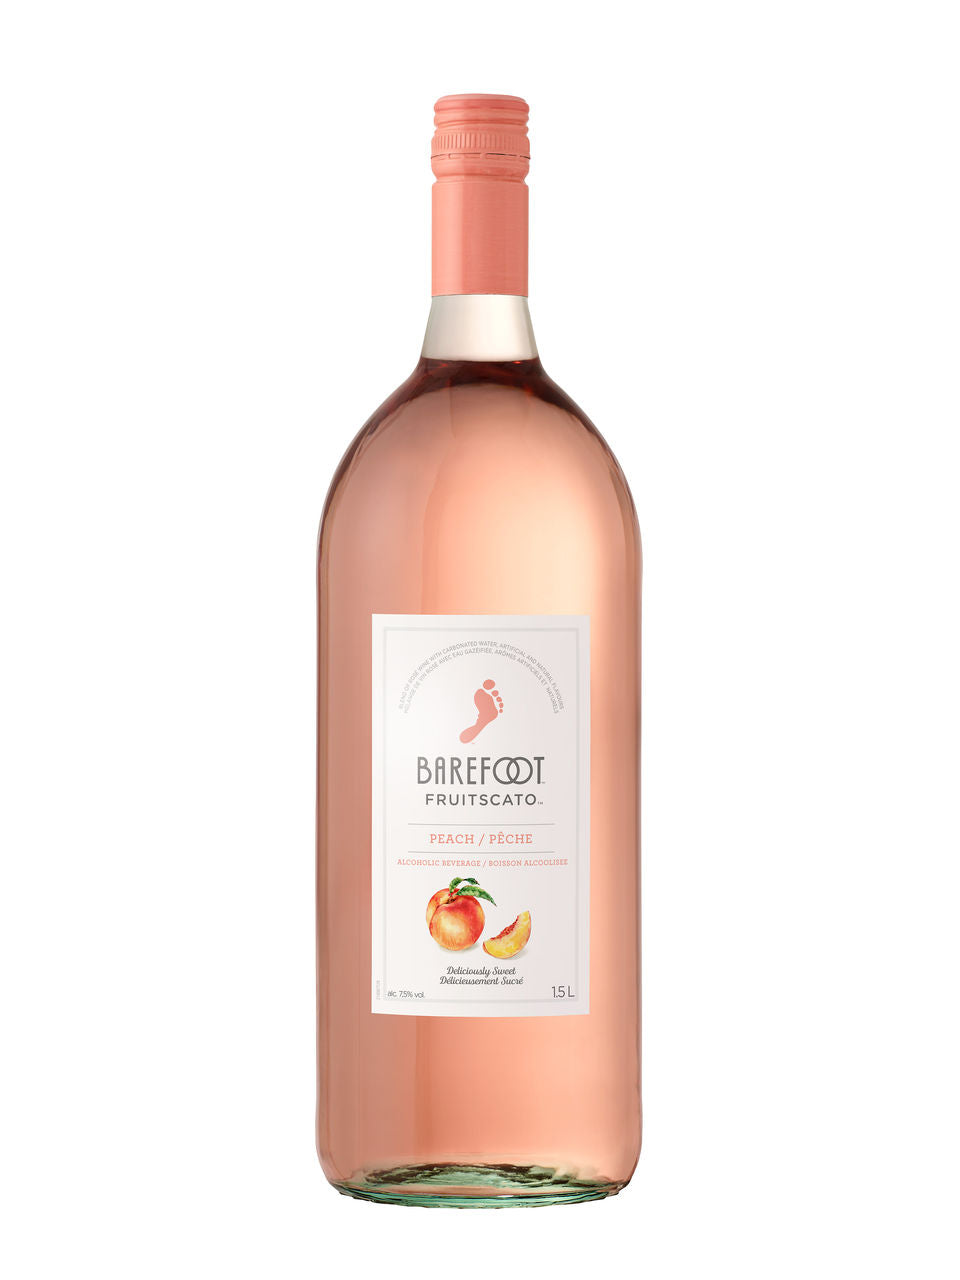 Barefoot Fruitscato Peach 1500 ml bottle